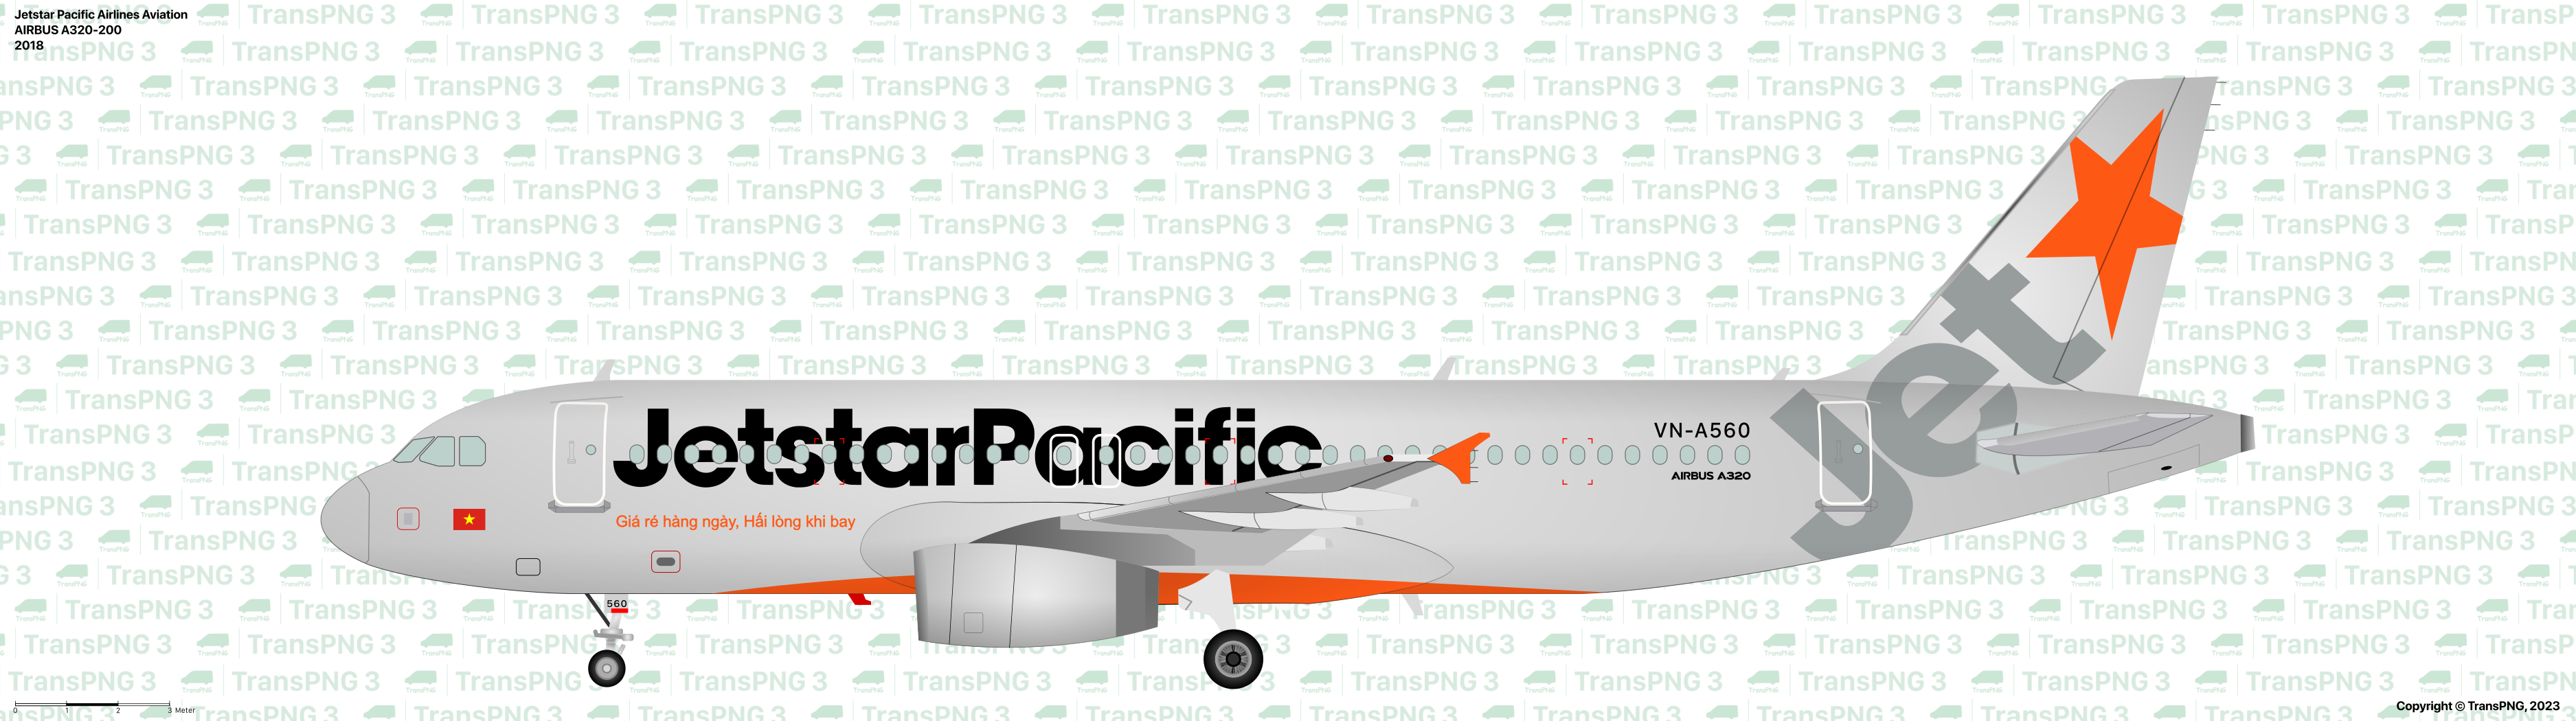 TransPNG | 世界中の様々な乗り物の優れたイラストを共有する - 旅客機 53300166009_47ec14d6c1_o